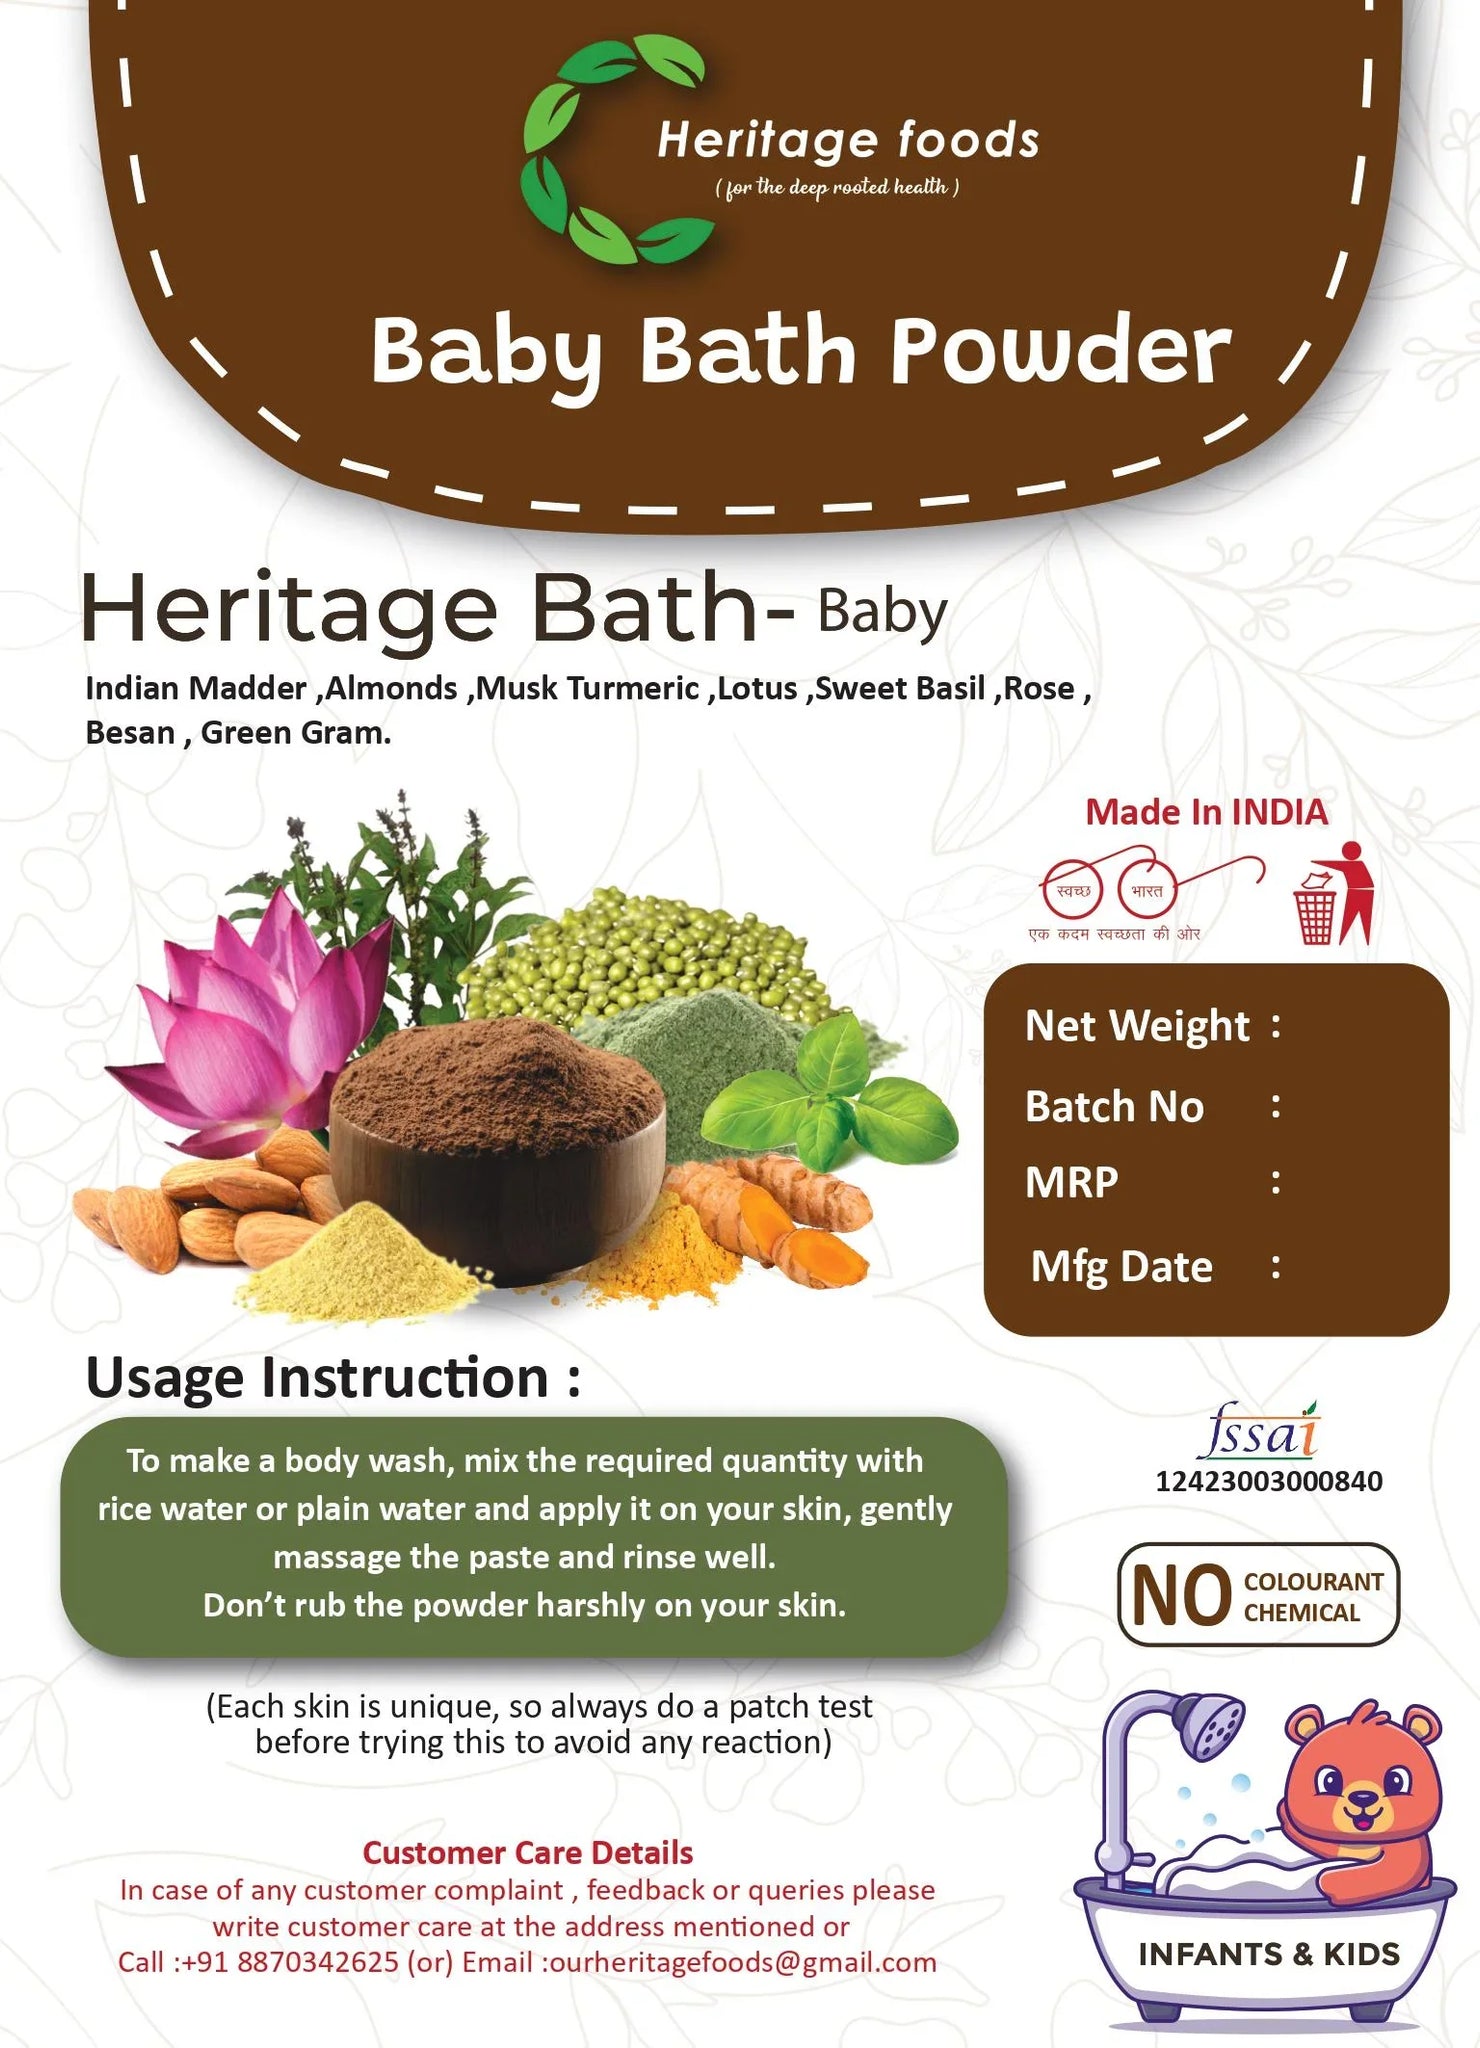 Baby Heritage Bath Powder